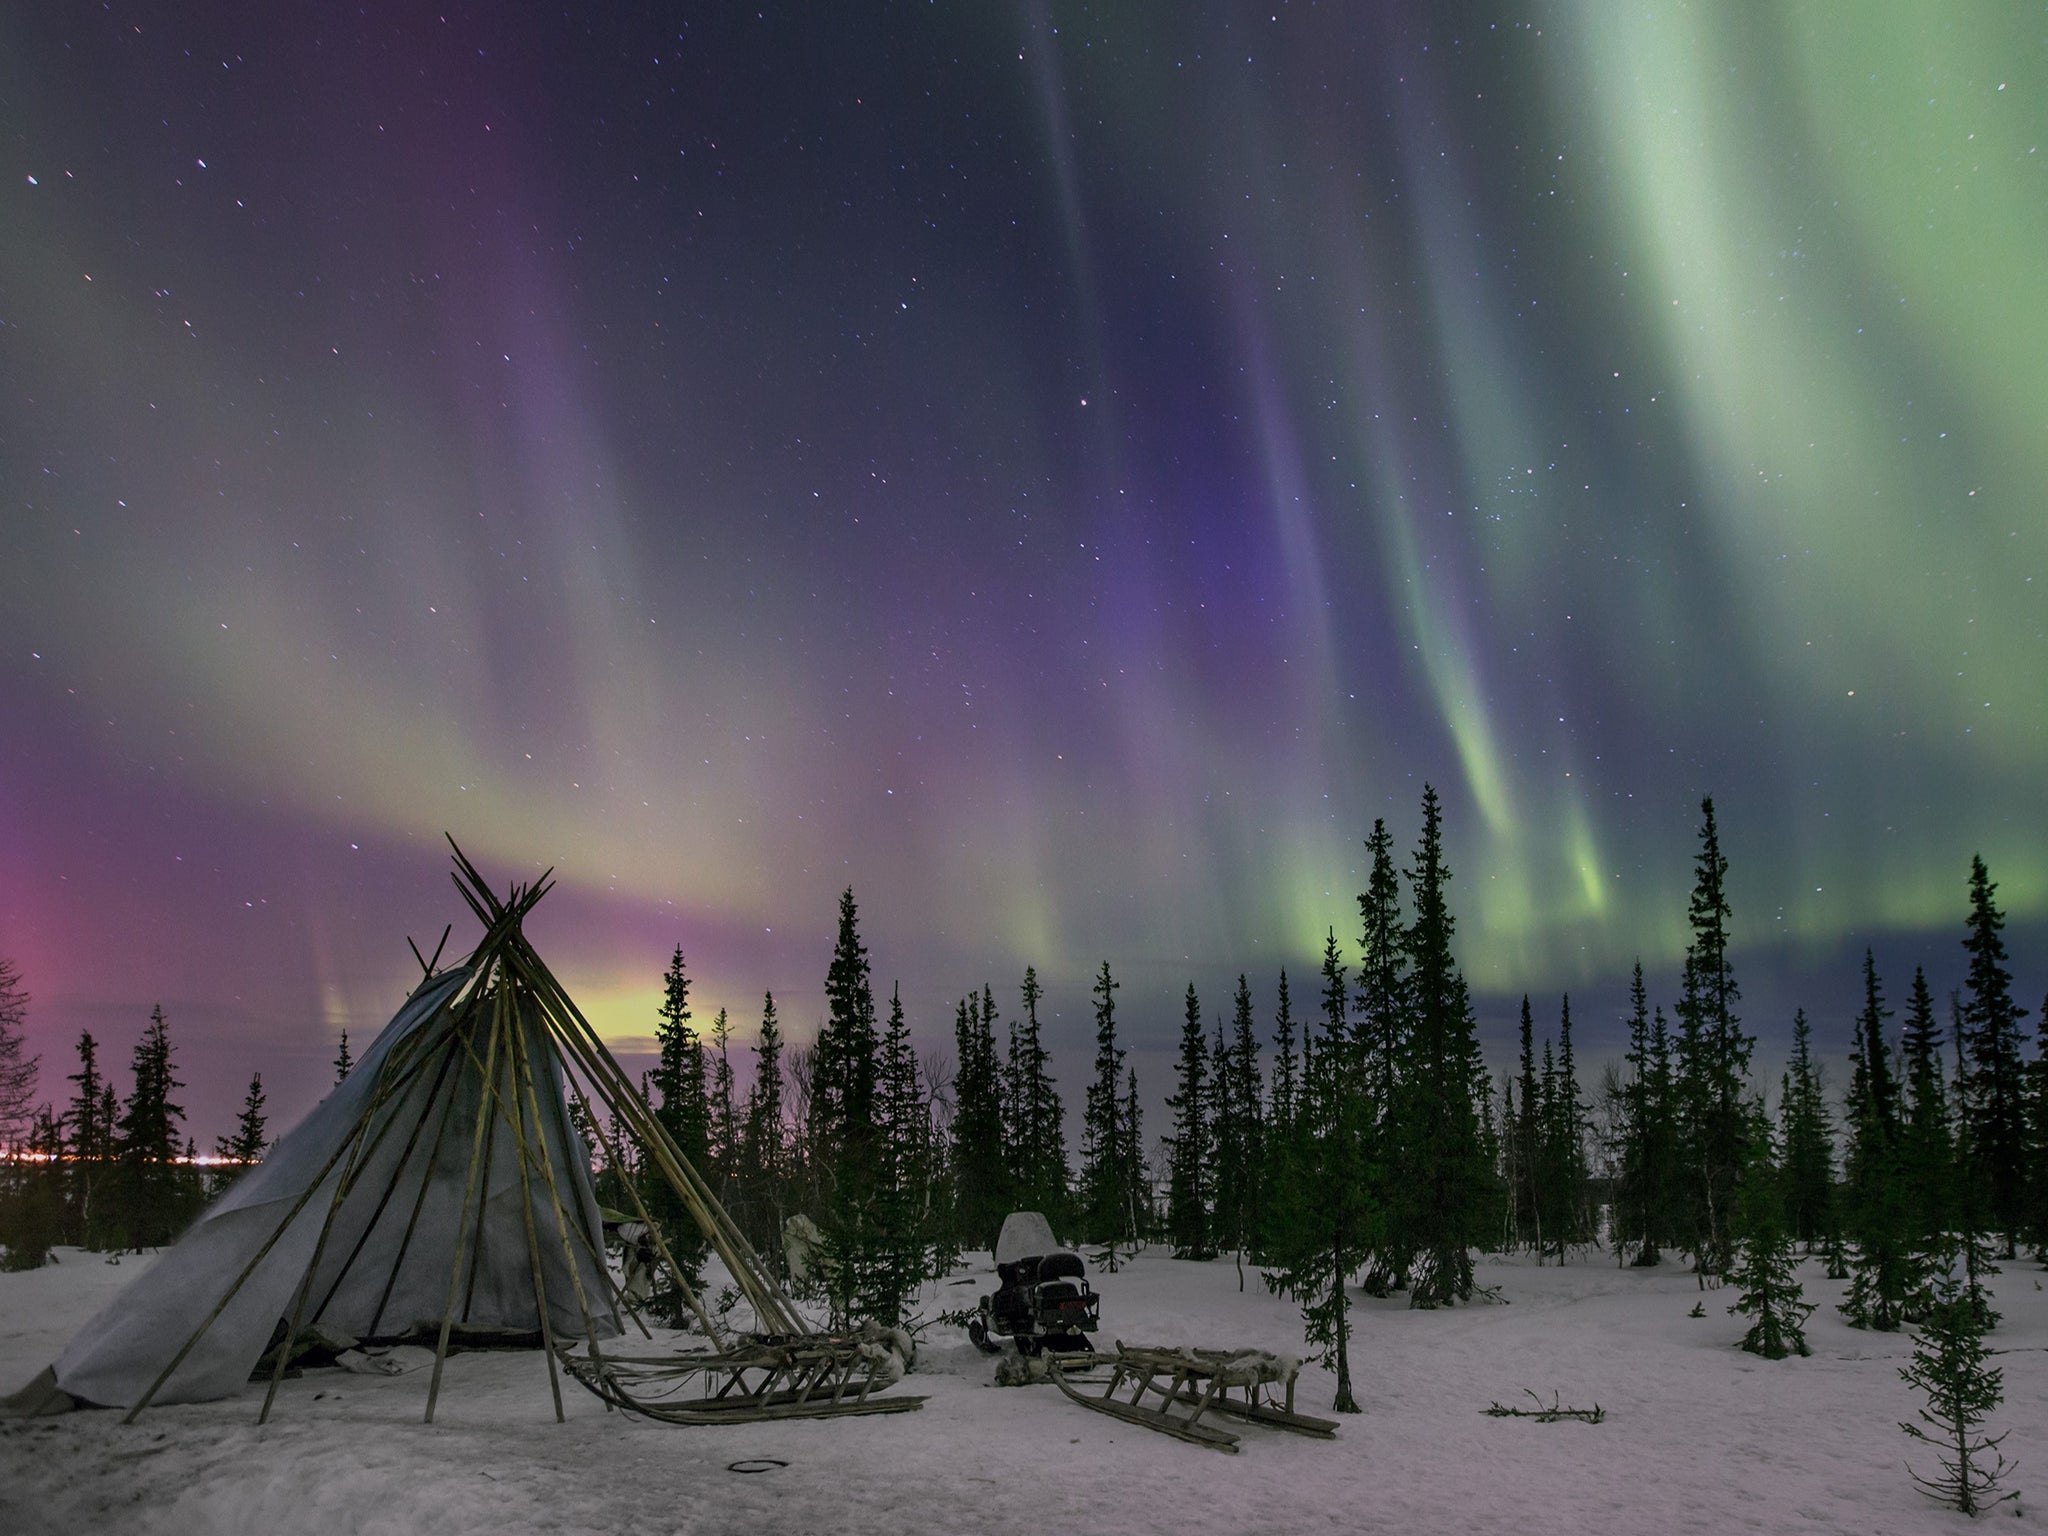 Northern Lights seen near the town of Salekhard, Yamalo-Nenets Autonomous Okrug, Russia